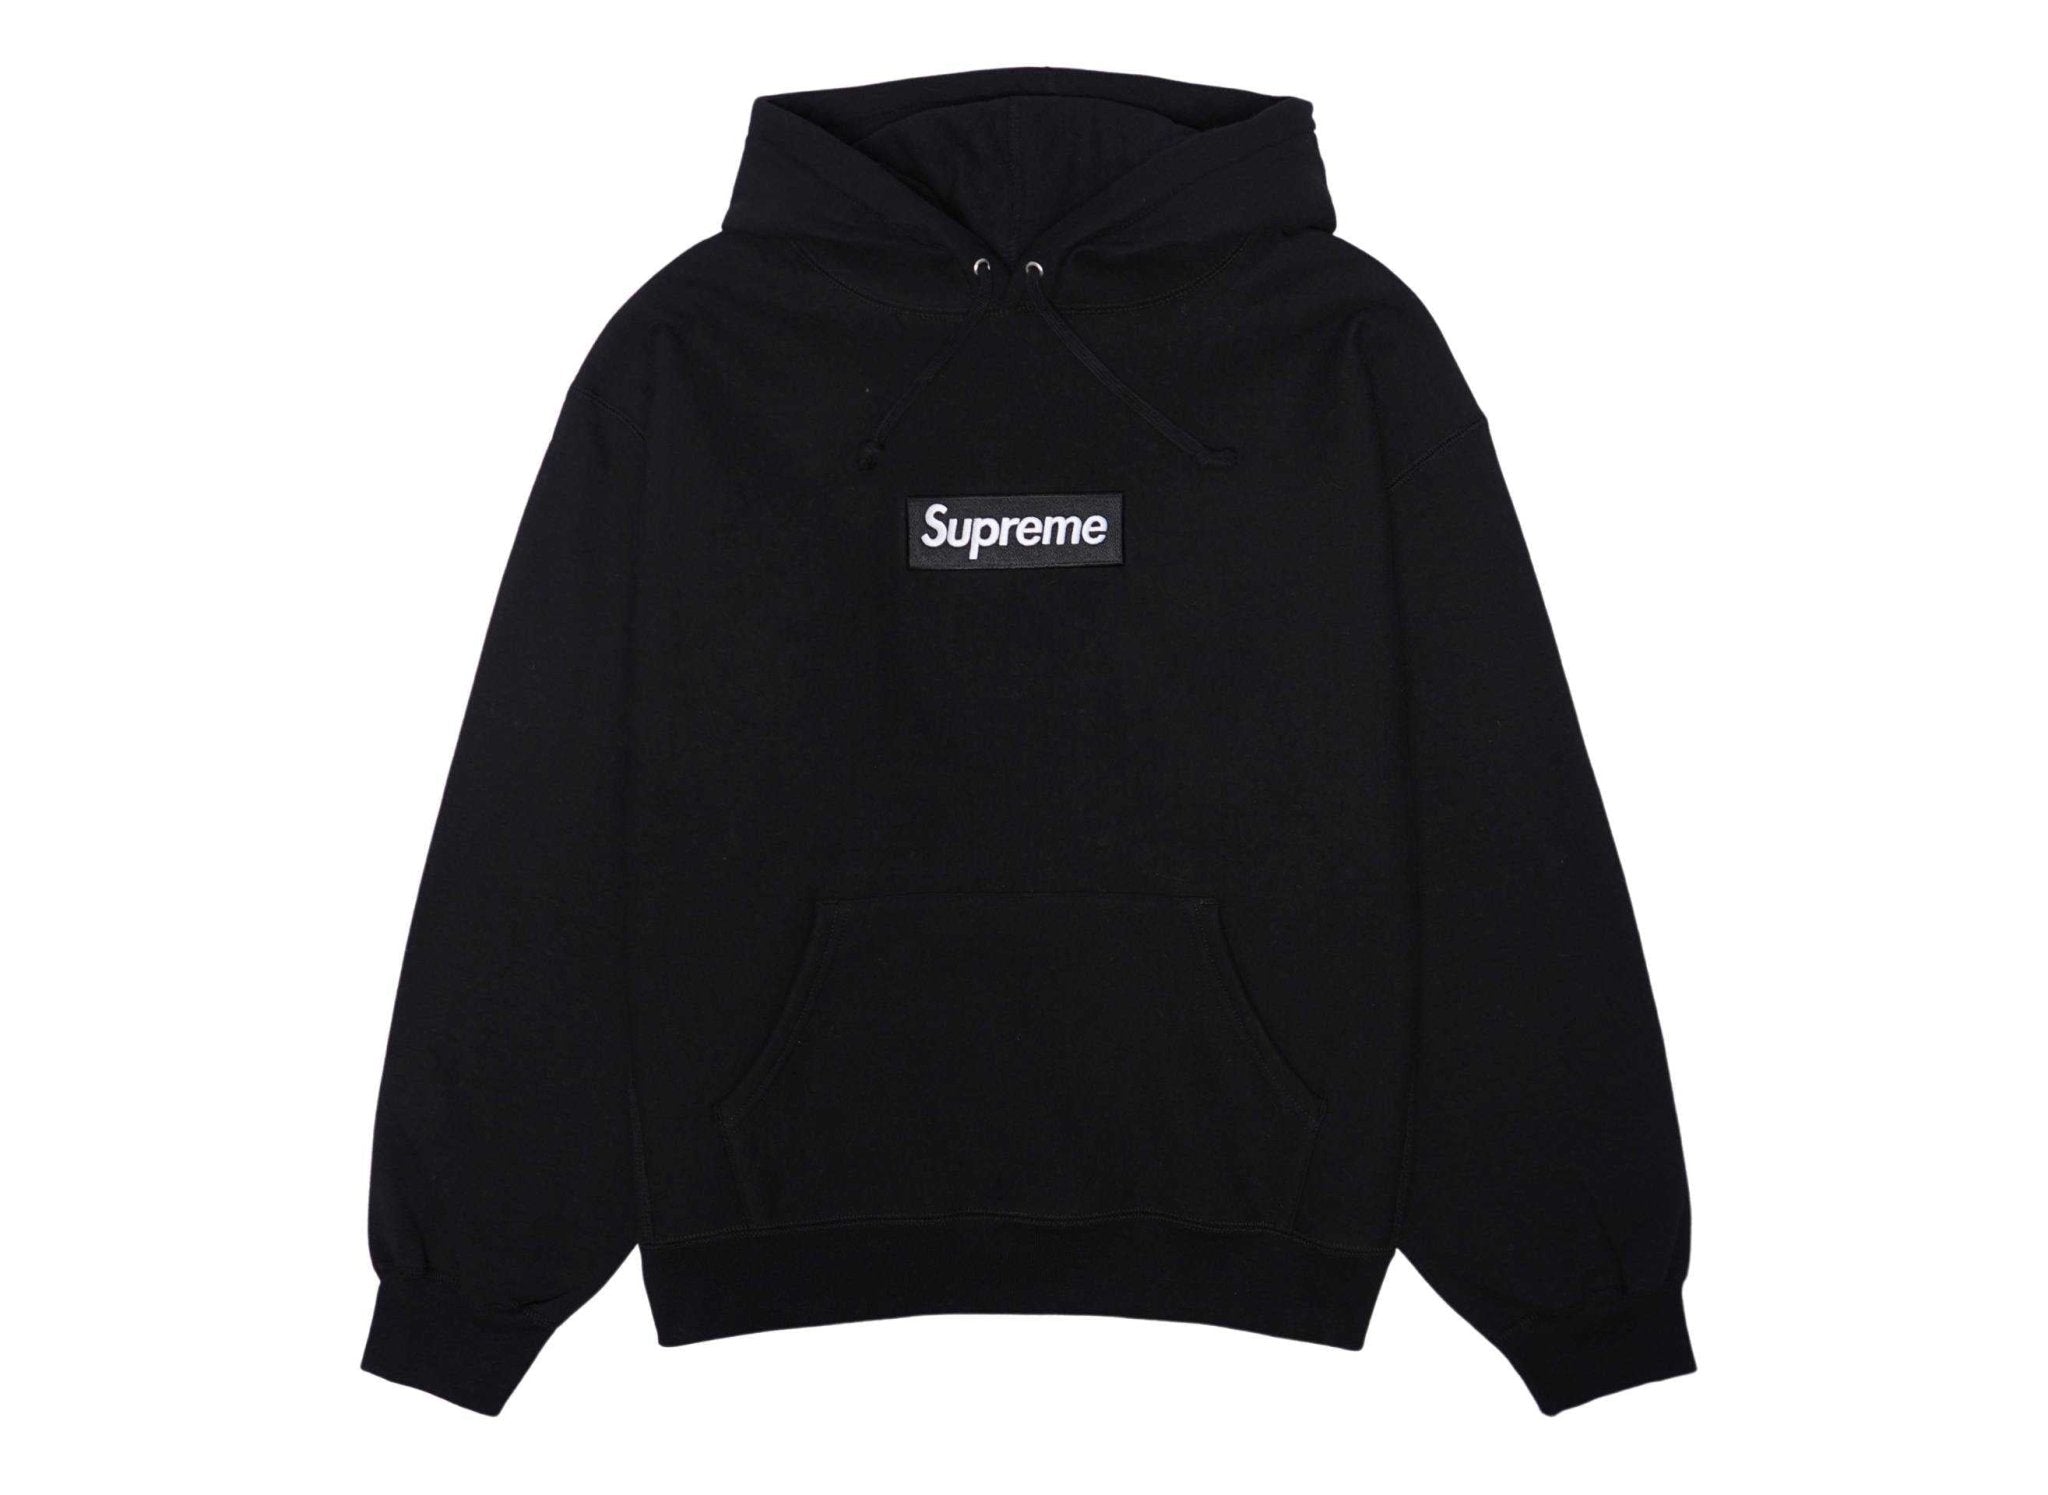 supreme box logo hoodie シュプリーム ボックスロゴトップス - パーカー